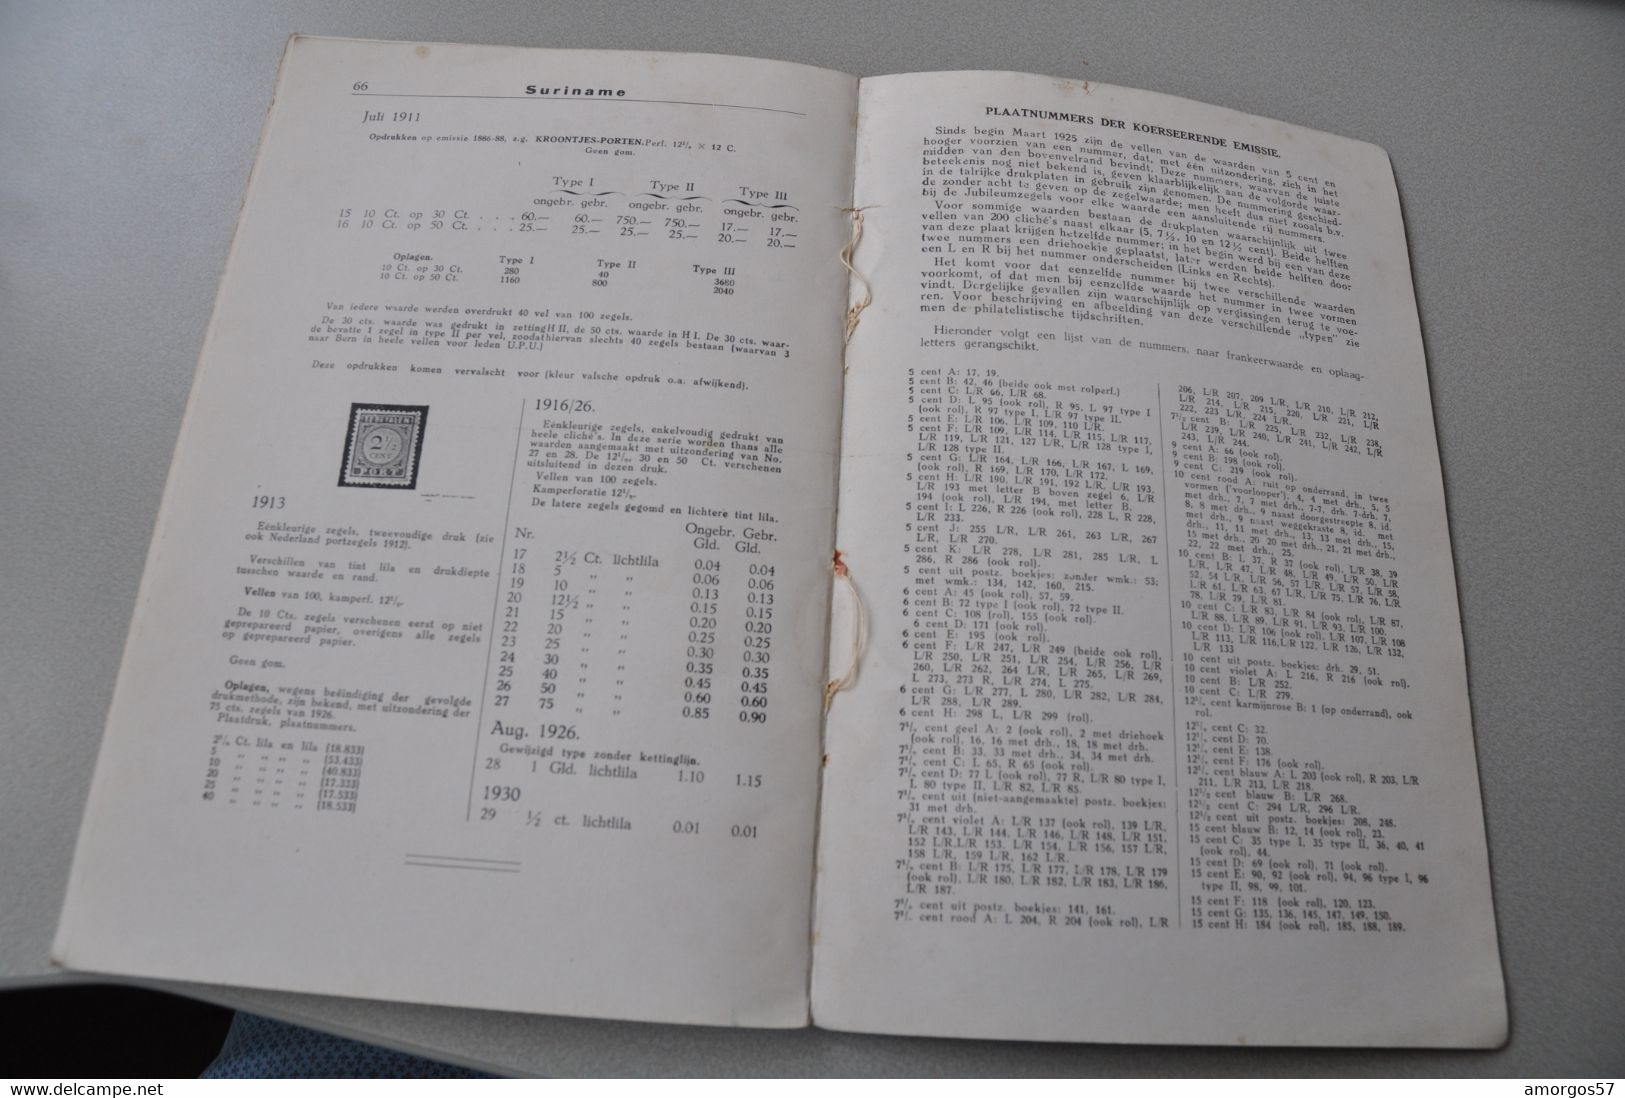 uitgebreide catalogus van Nederland en kolonien. PC Korteweg. Uitgever Mebus Postzegelhandel 1930 (eerste druk?) 66 pag.